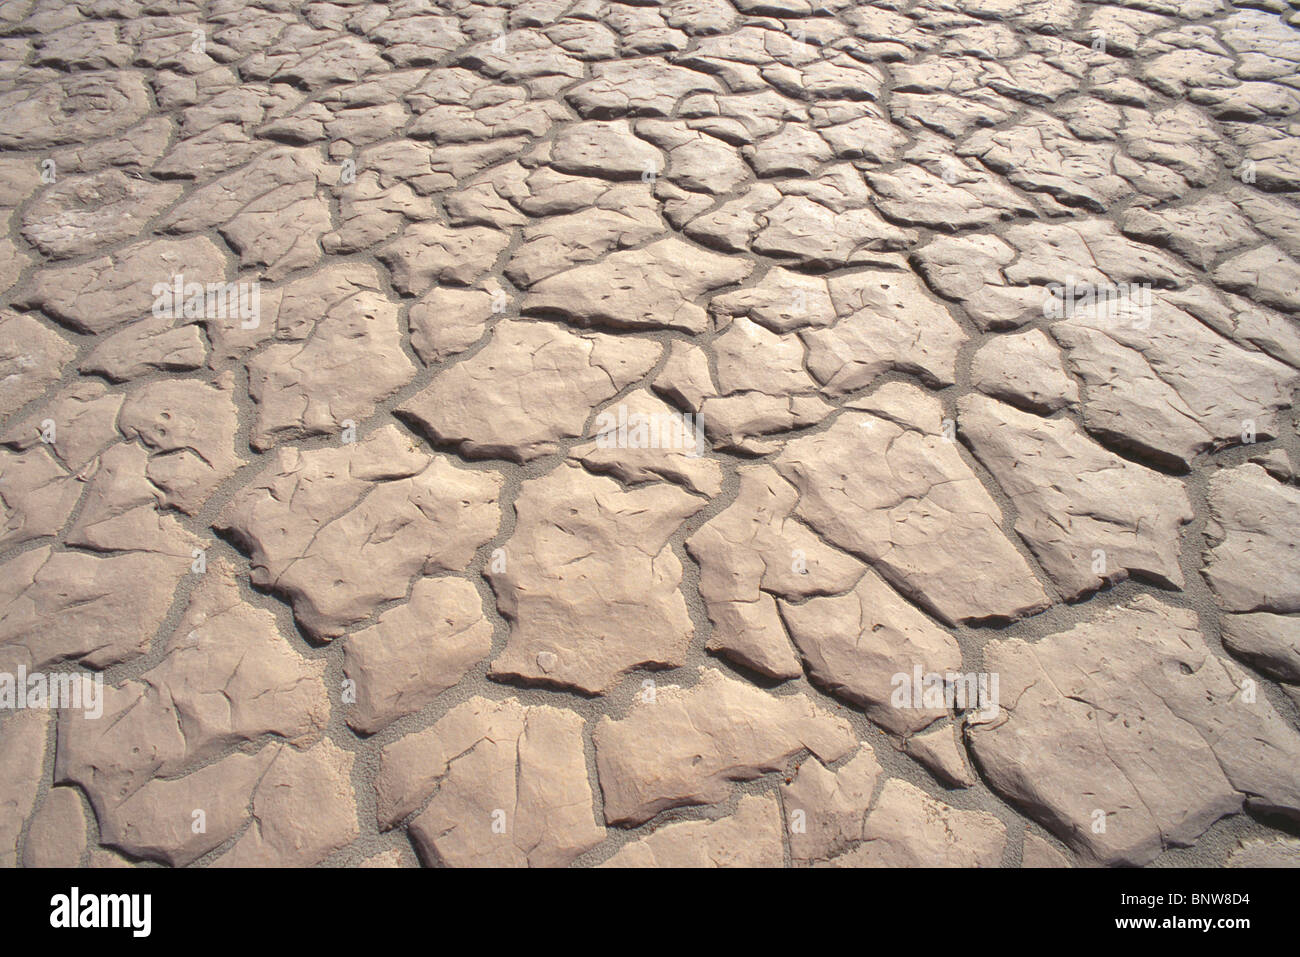 Motif en mosaïque de sol du désert, la vallée de la mort, Californie, USA. Banque D'Images